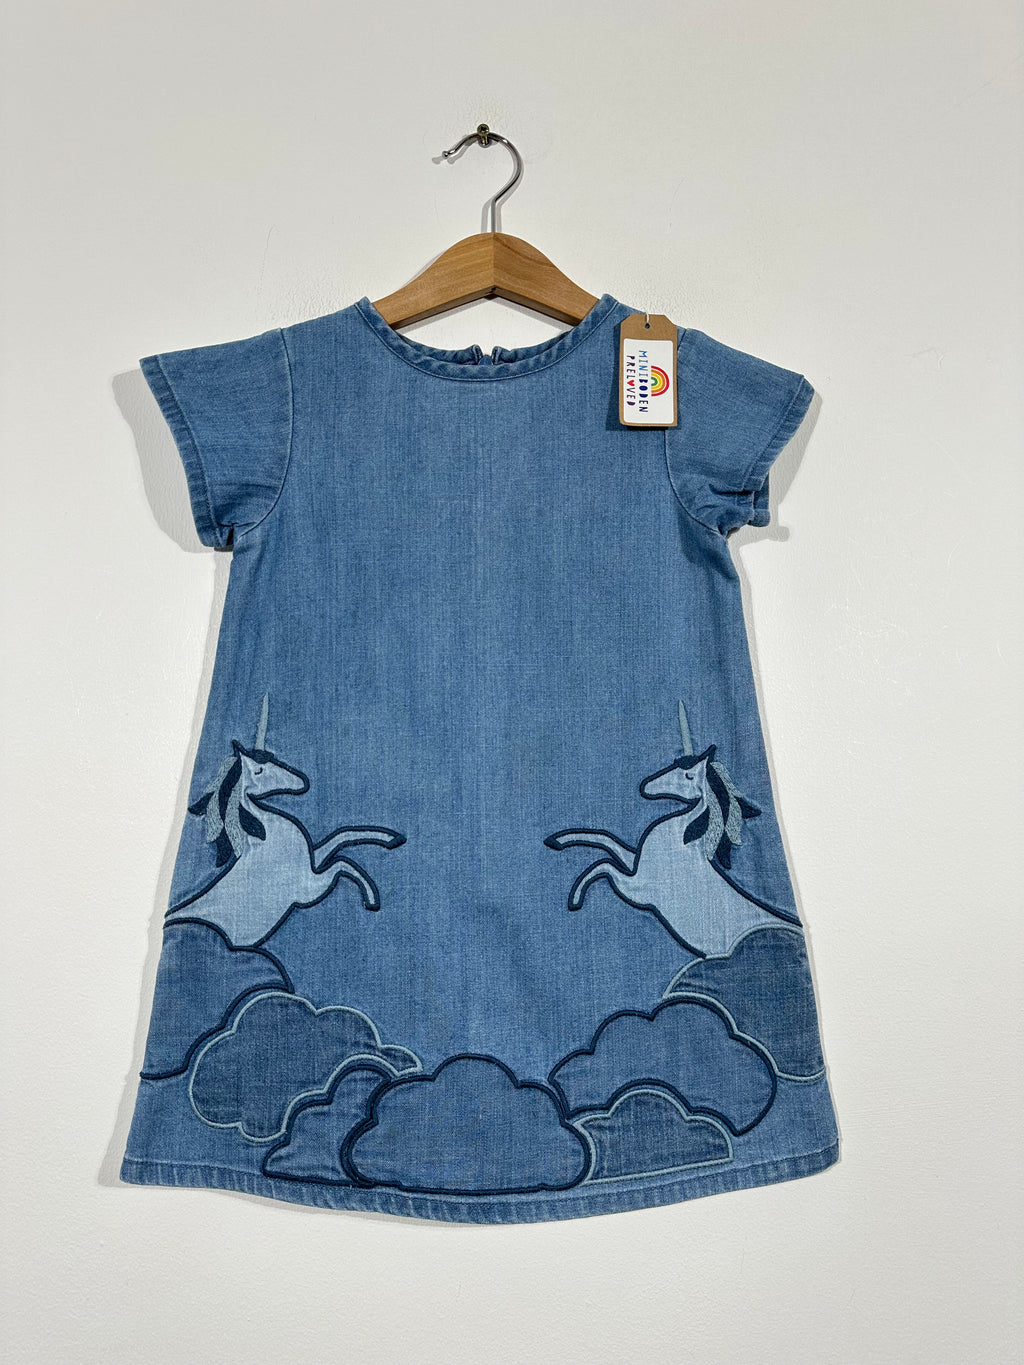 Lovely Embroidered Unicorn Denim Dress (2-3 Years)